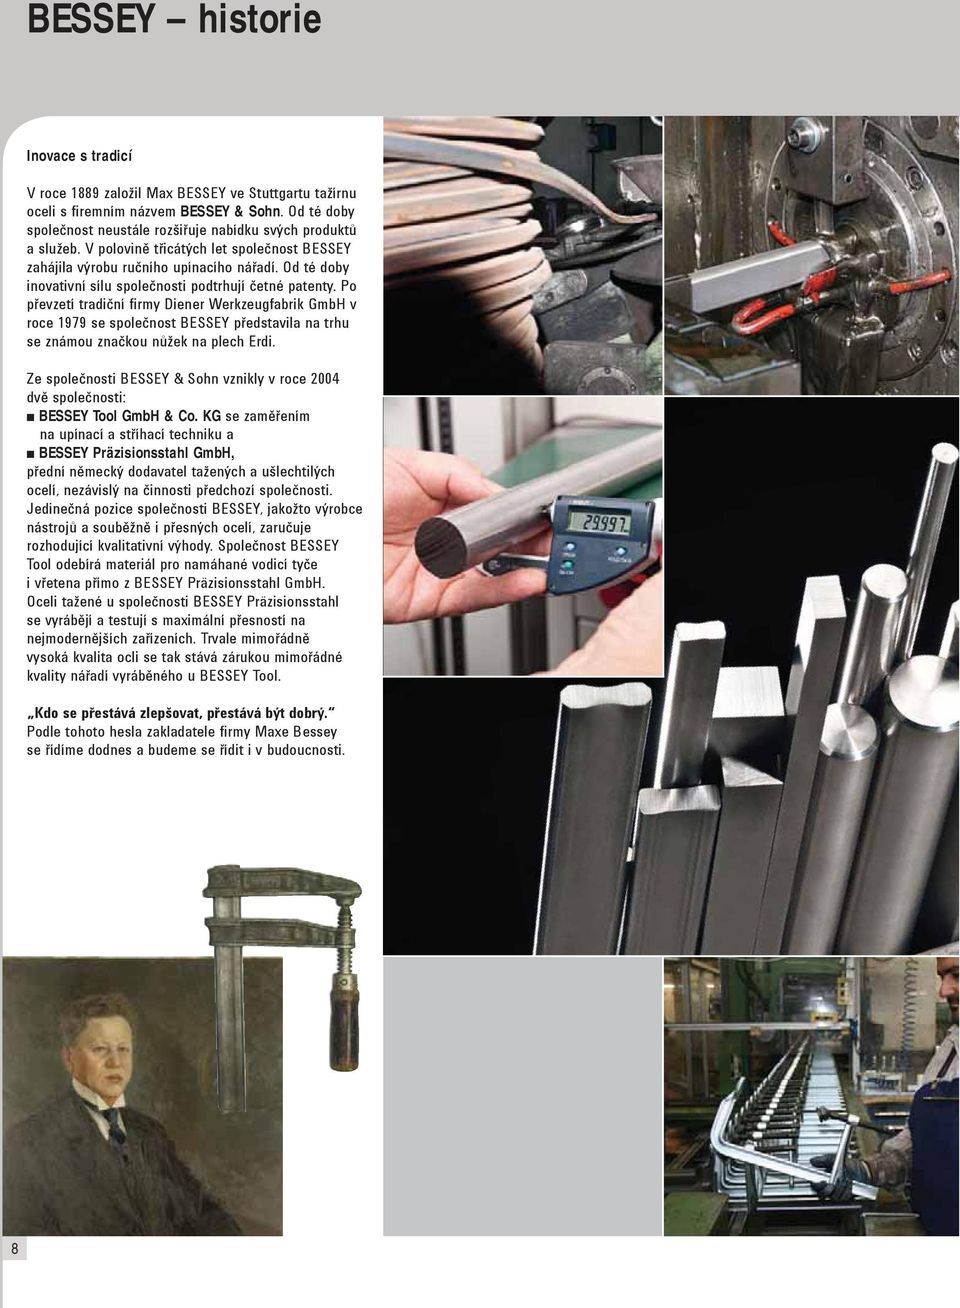 BESSEY Tool GmbH & Co.